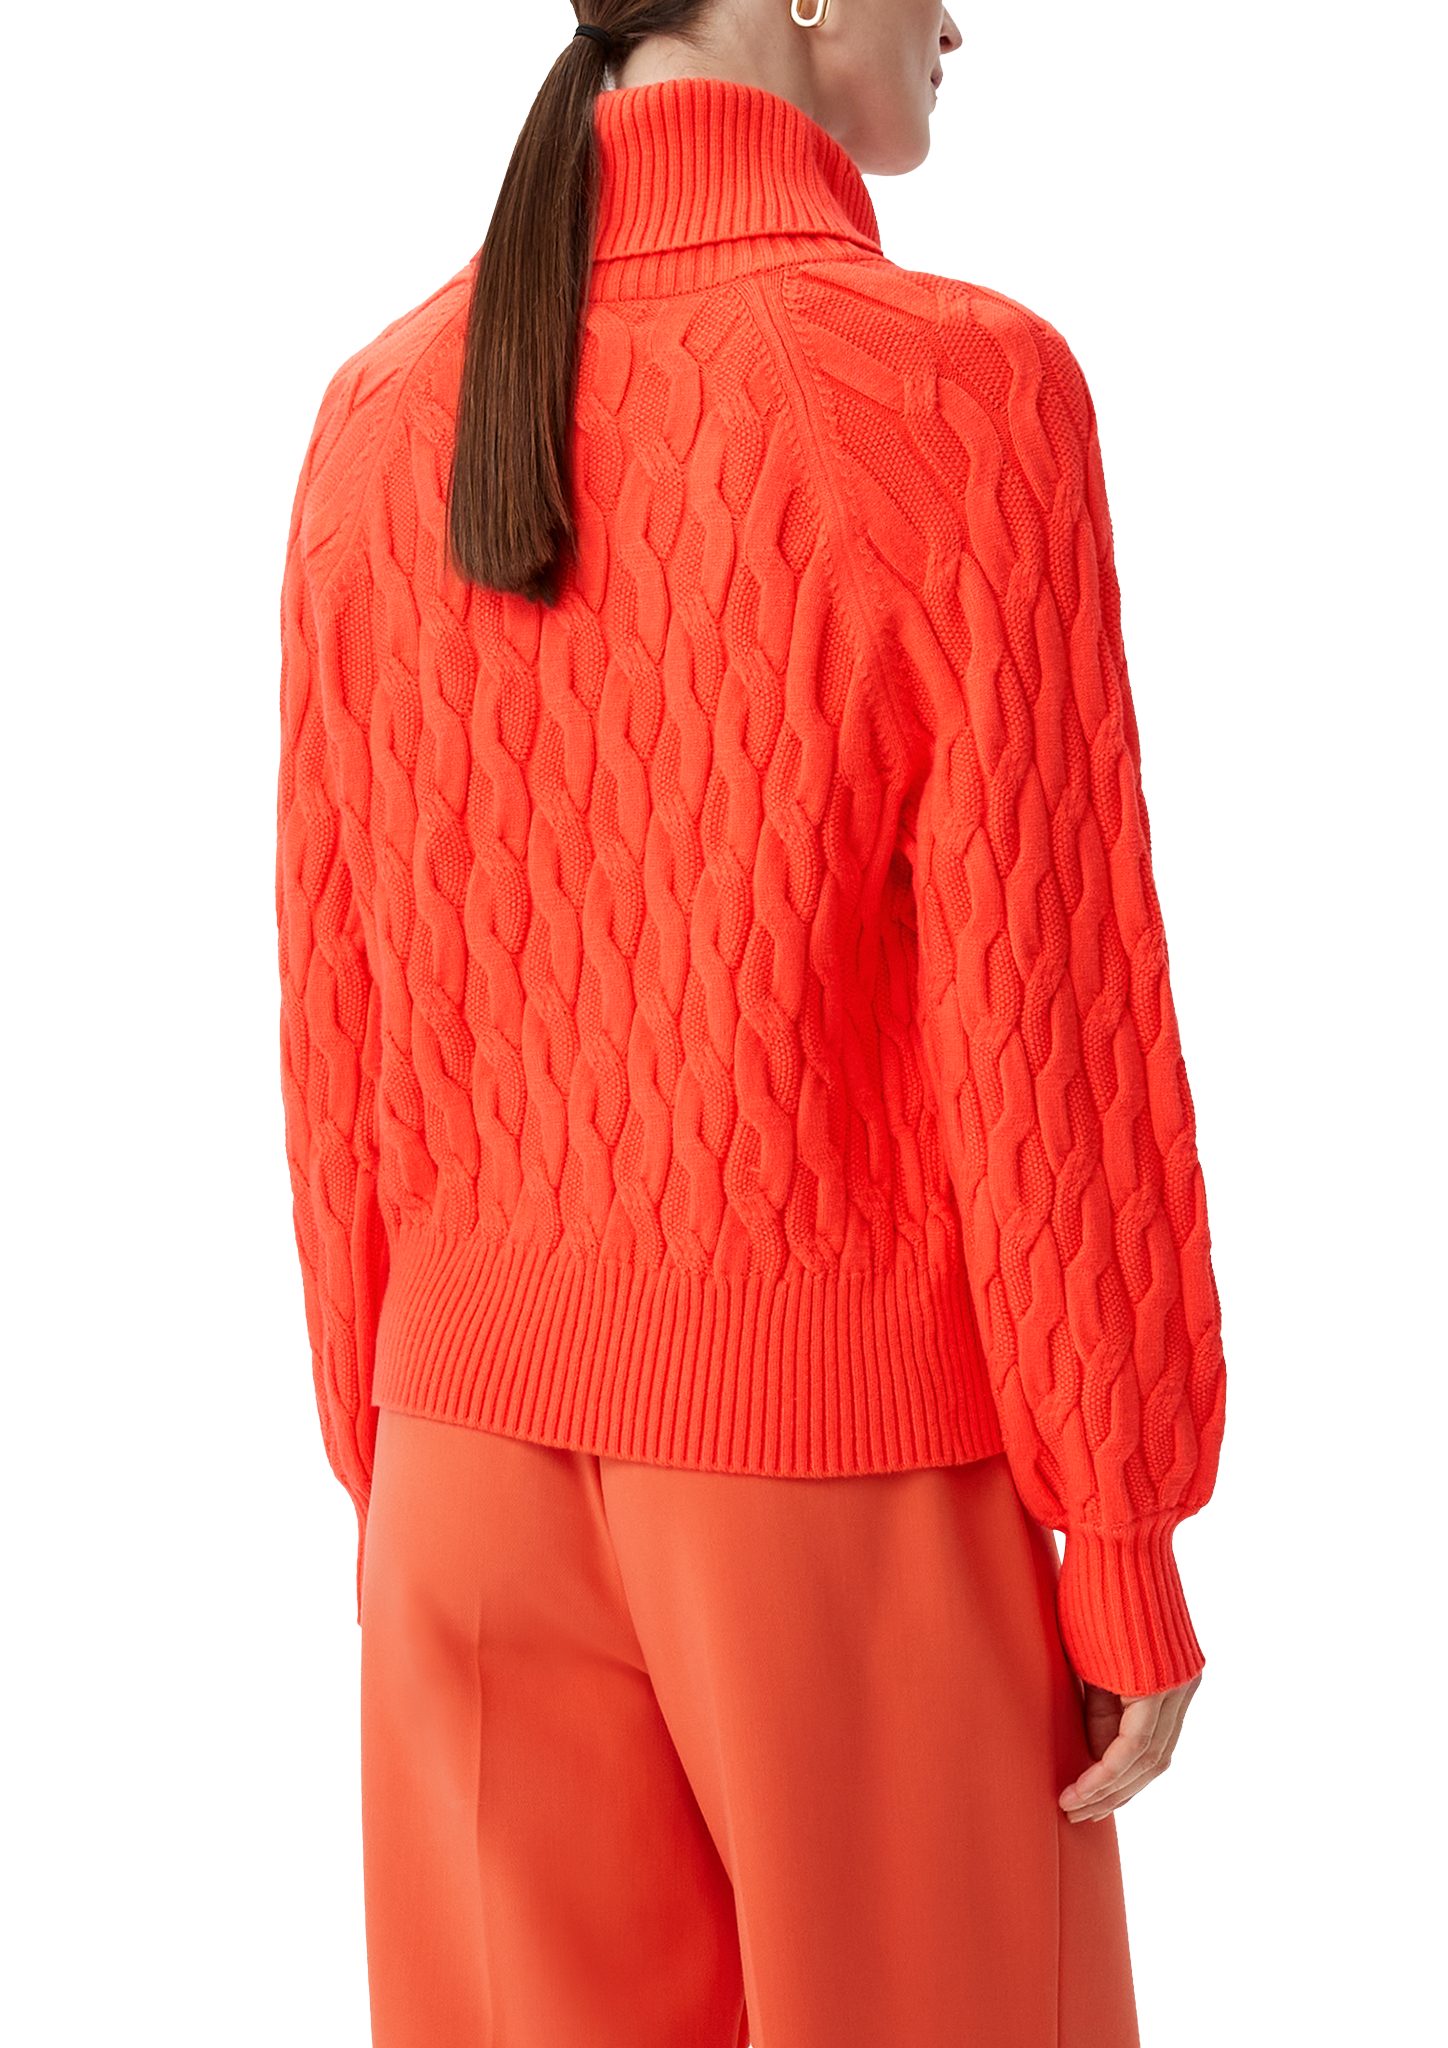 Comma Langarmshirt Pullover orange mit Strickmuster